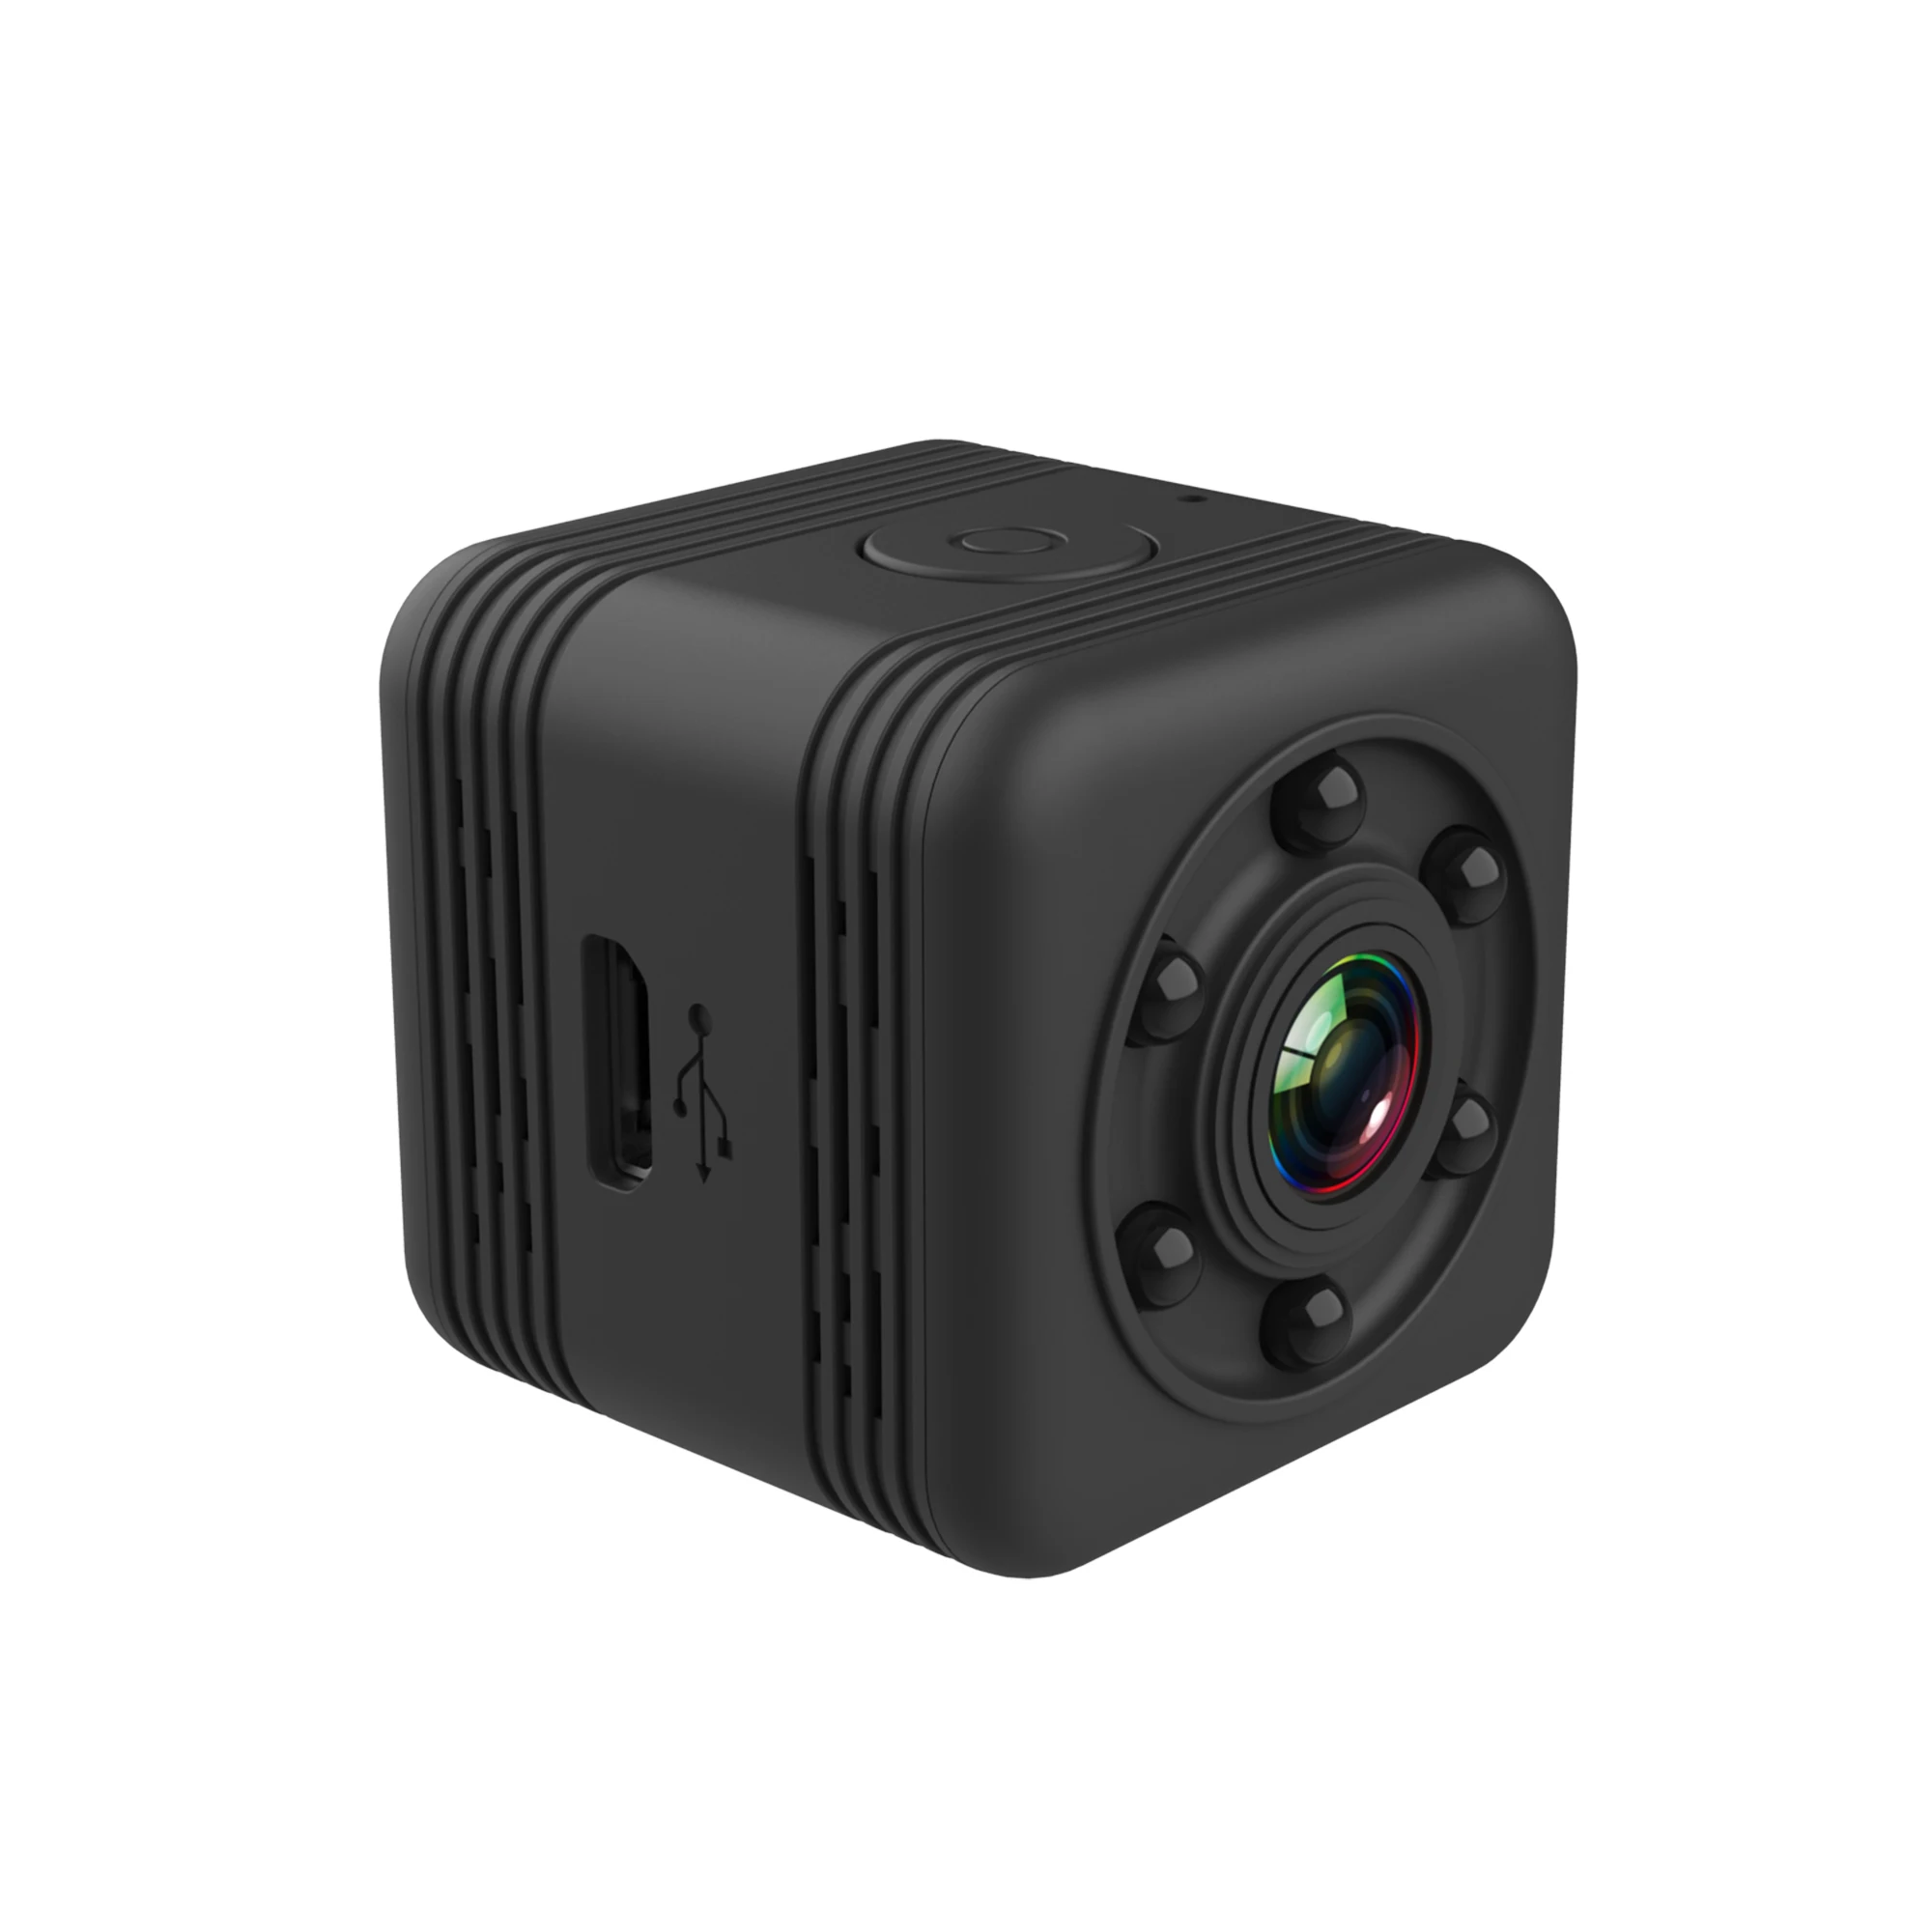 Mini Camara Sq29 Camera Full Hd Wifi 1080p Waterproof Video Camera Recorder  - Buy Sq29 Camera Product on Alibaba.com